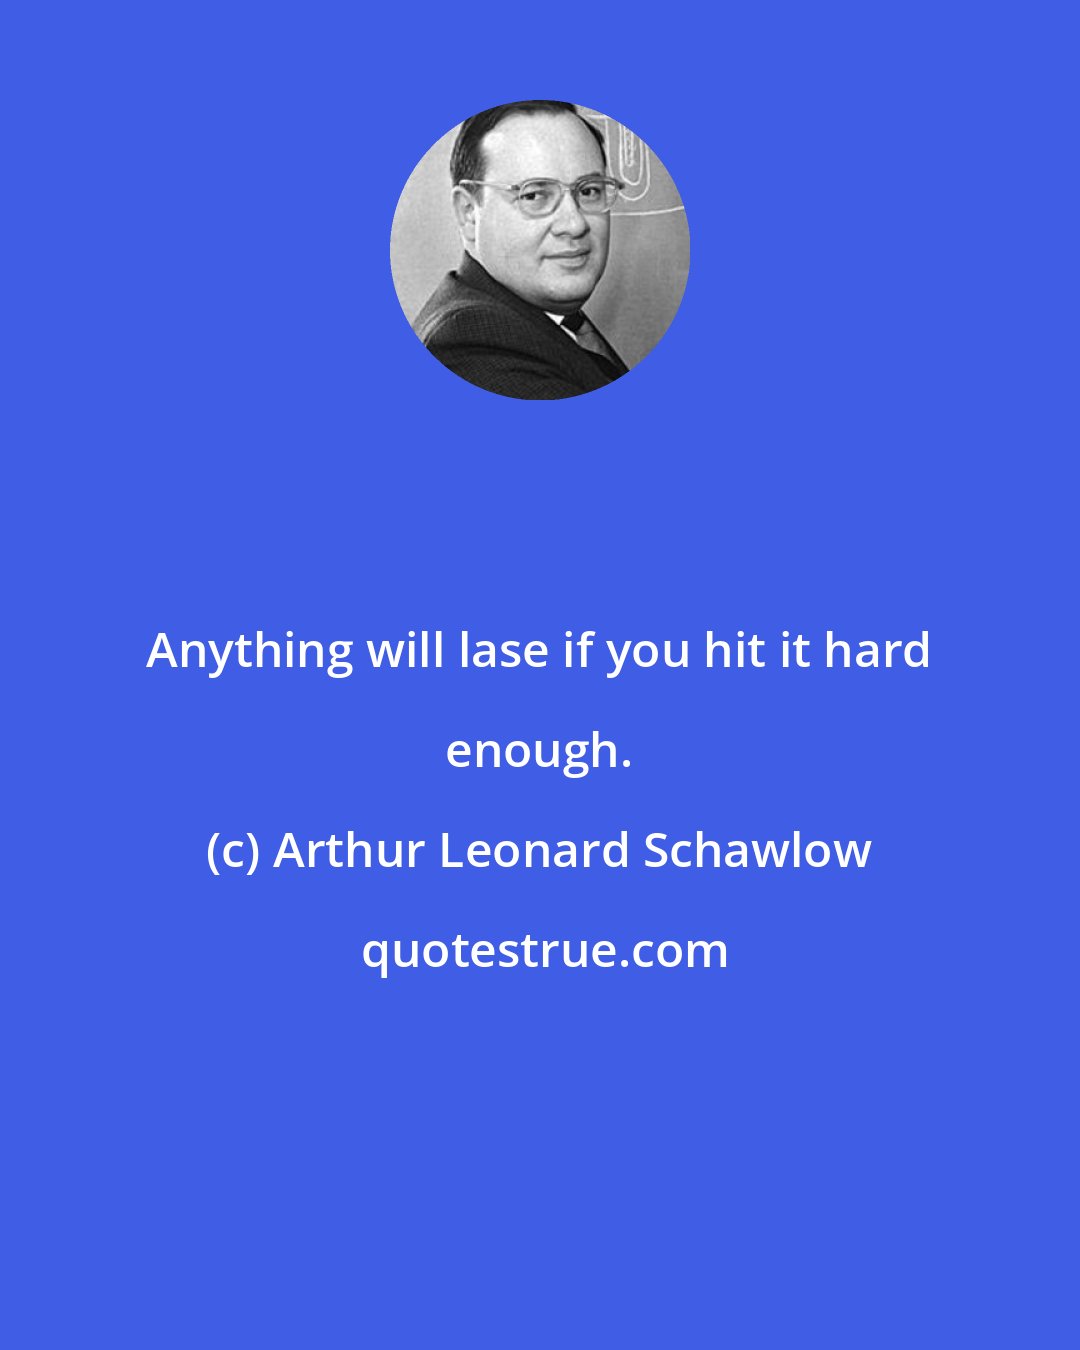 Arthur Leonard Schawlow: Anything will lase if you hit it hard enough.